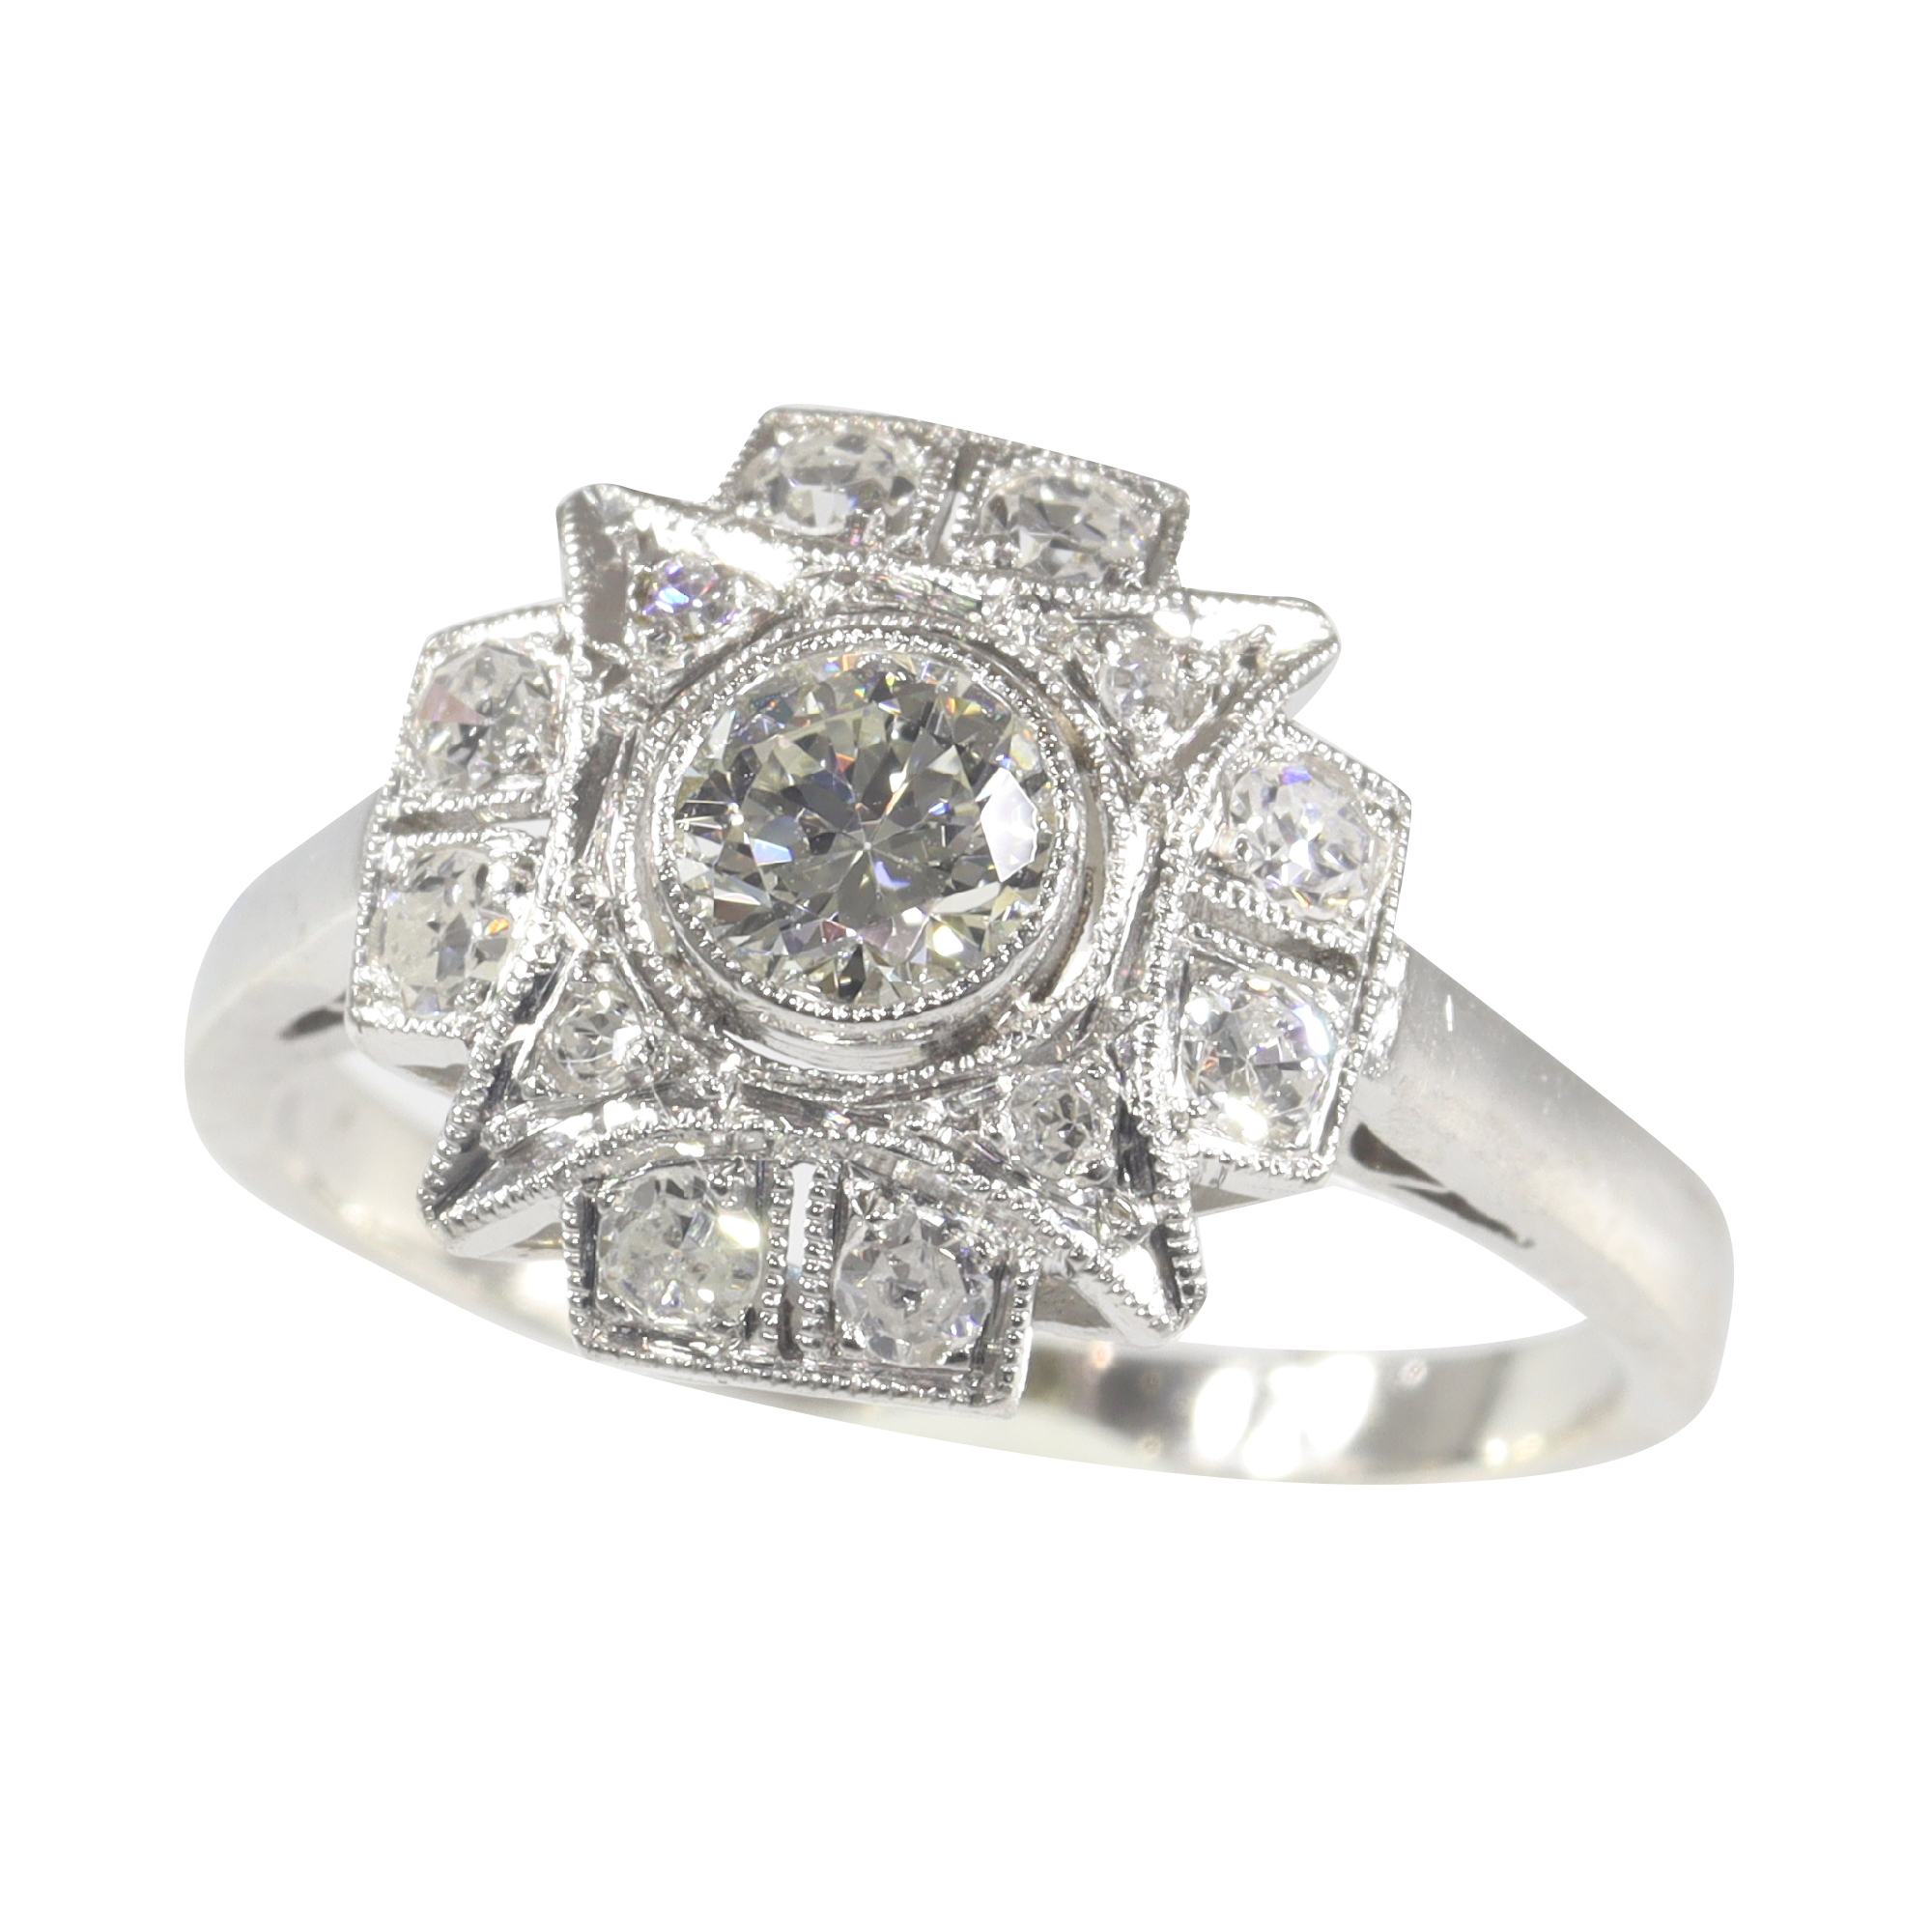 Vintage 1920's Art Deco diamond engagement ring